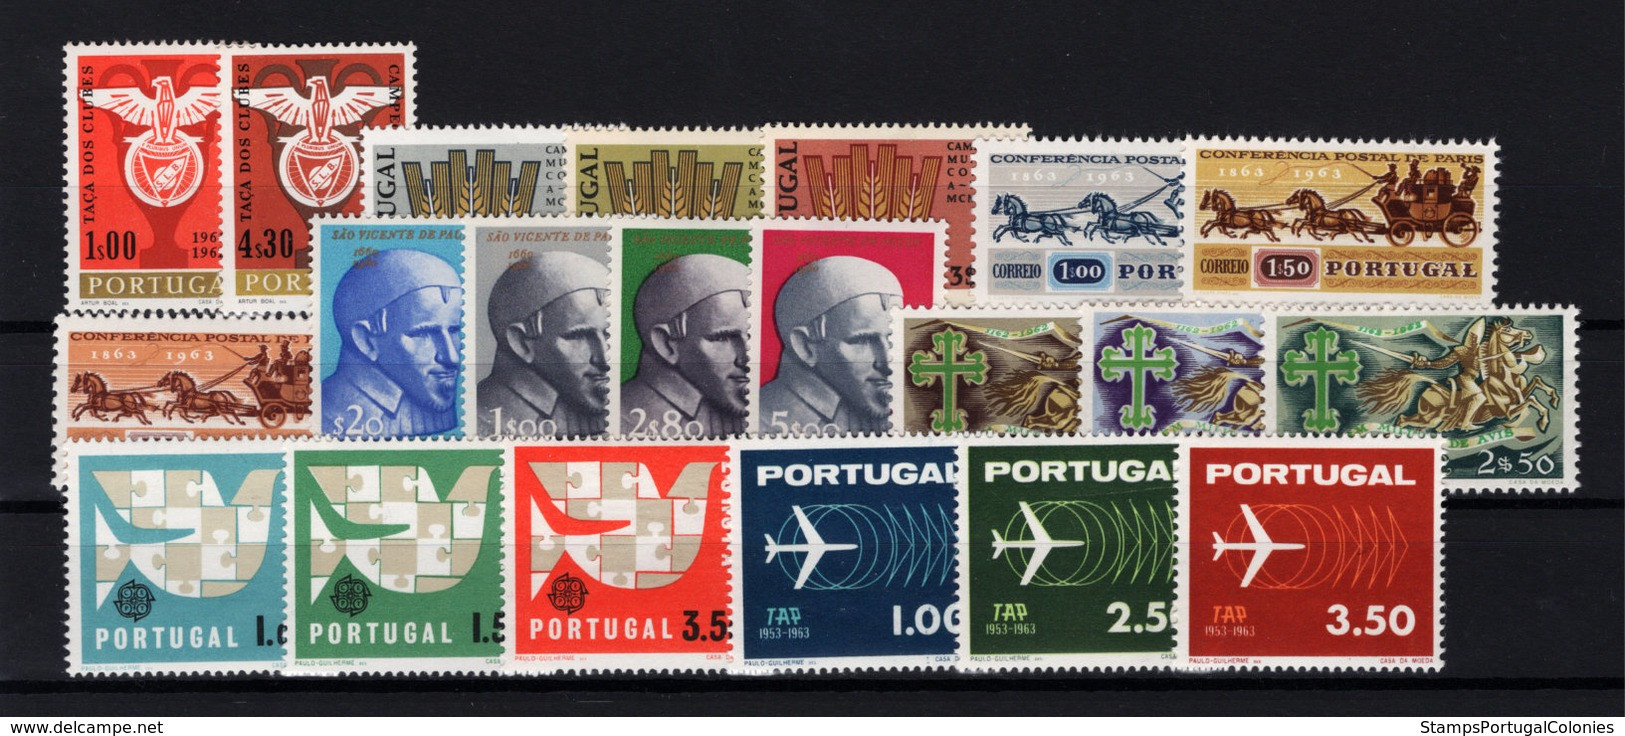 1963 Portugal Complete Year MNH Stamps. Année Compléte Timbres Neuf Sans Charnière. Ano Completo Novo Sem Charneira. - Années Complètes